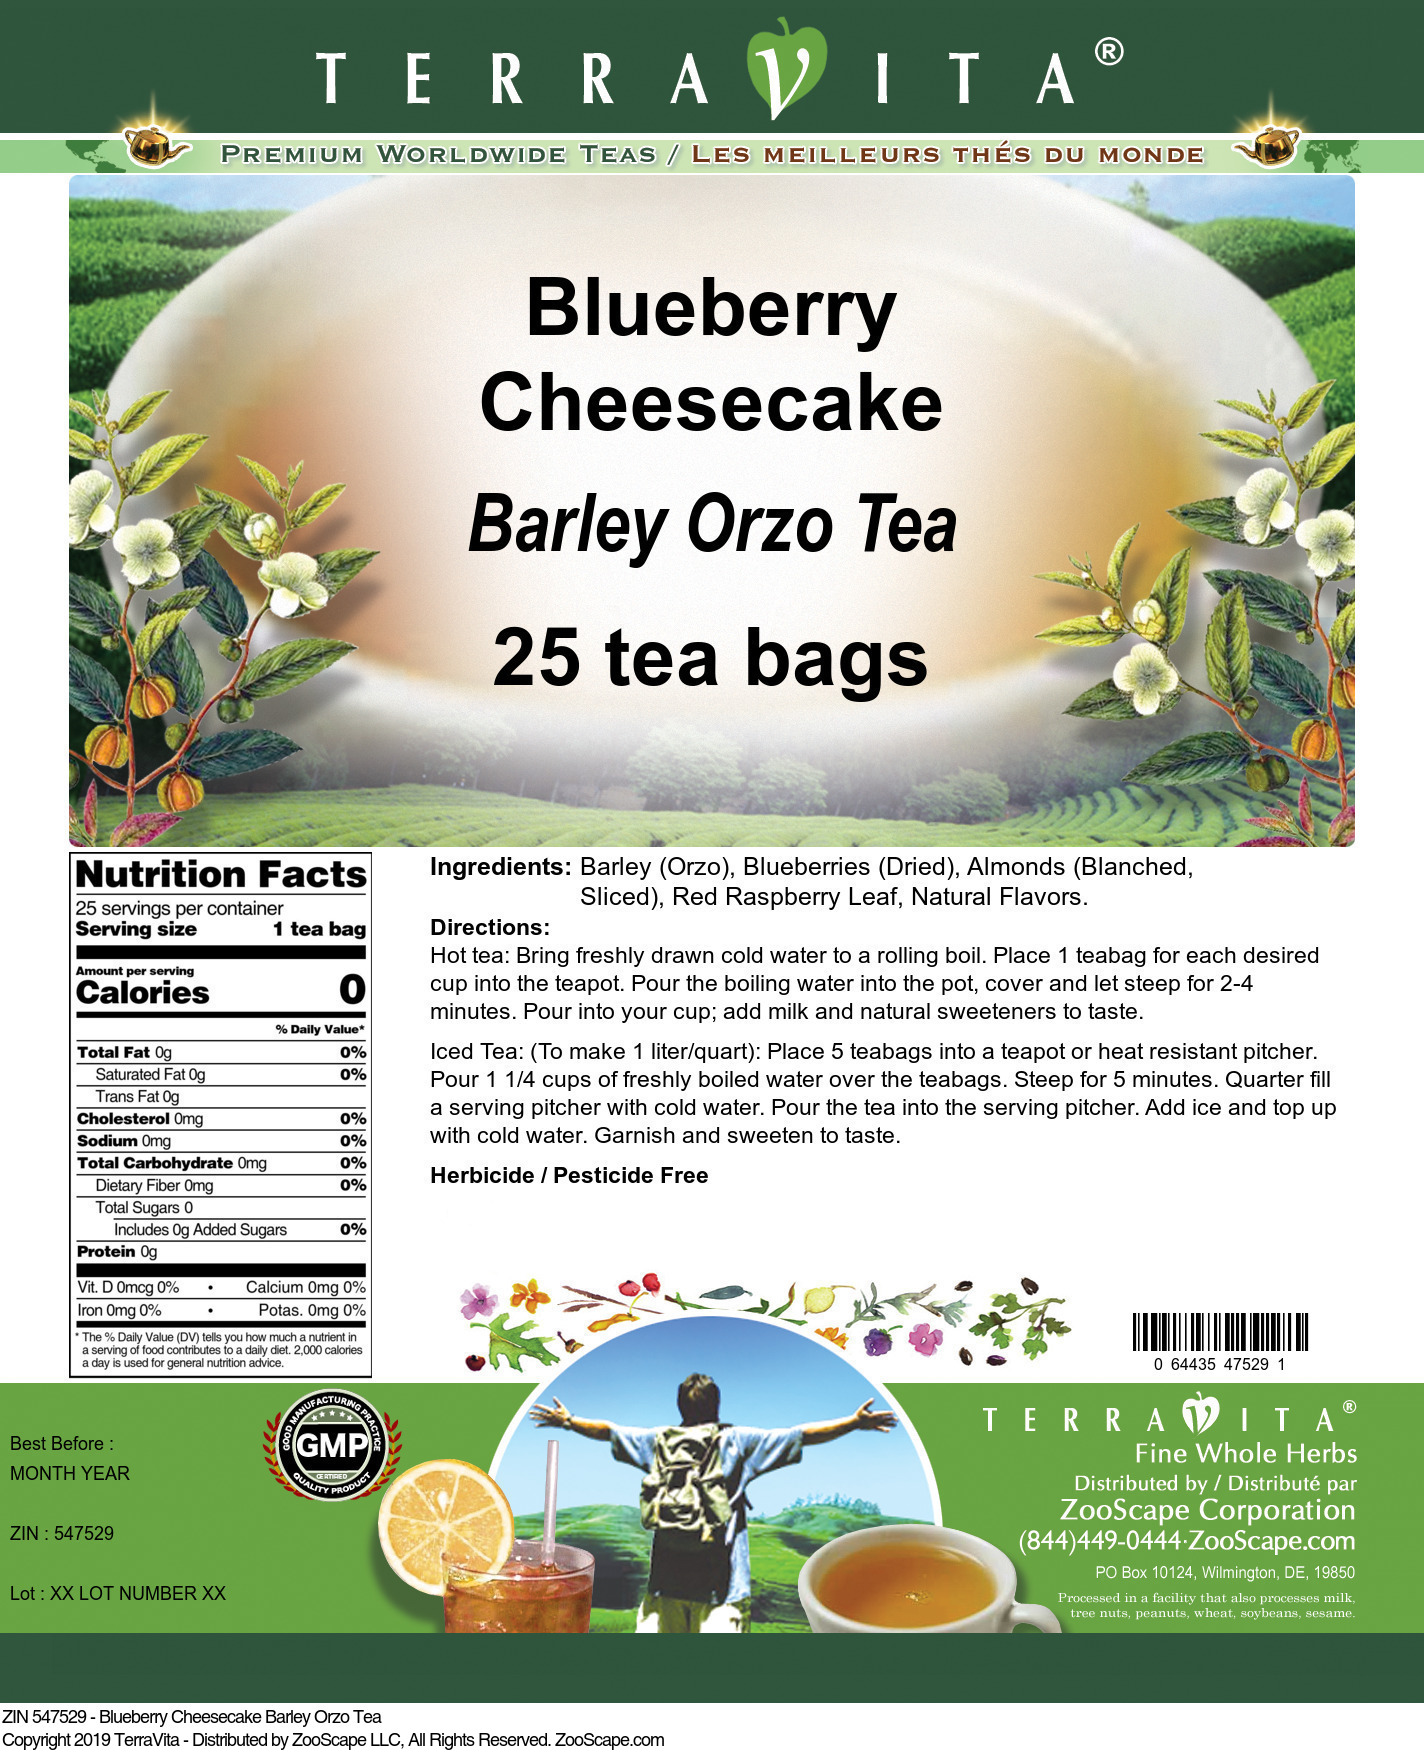 Blueberry Cheesecake Barley Orzo Tea - Label